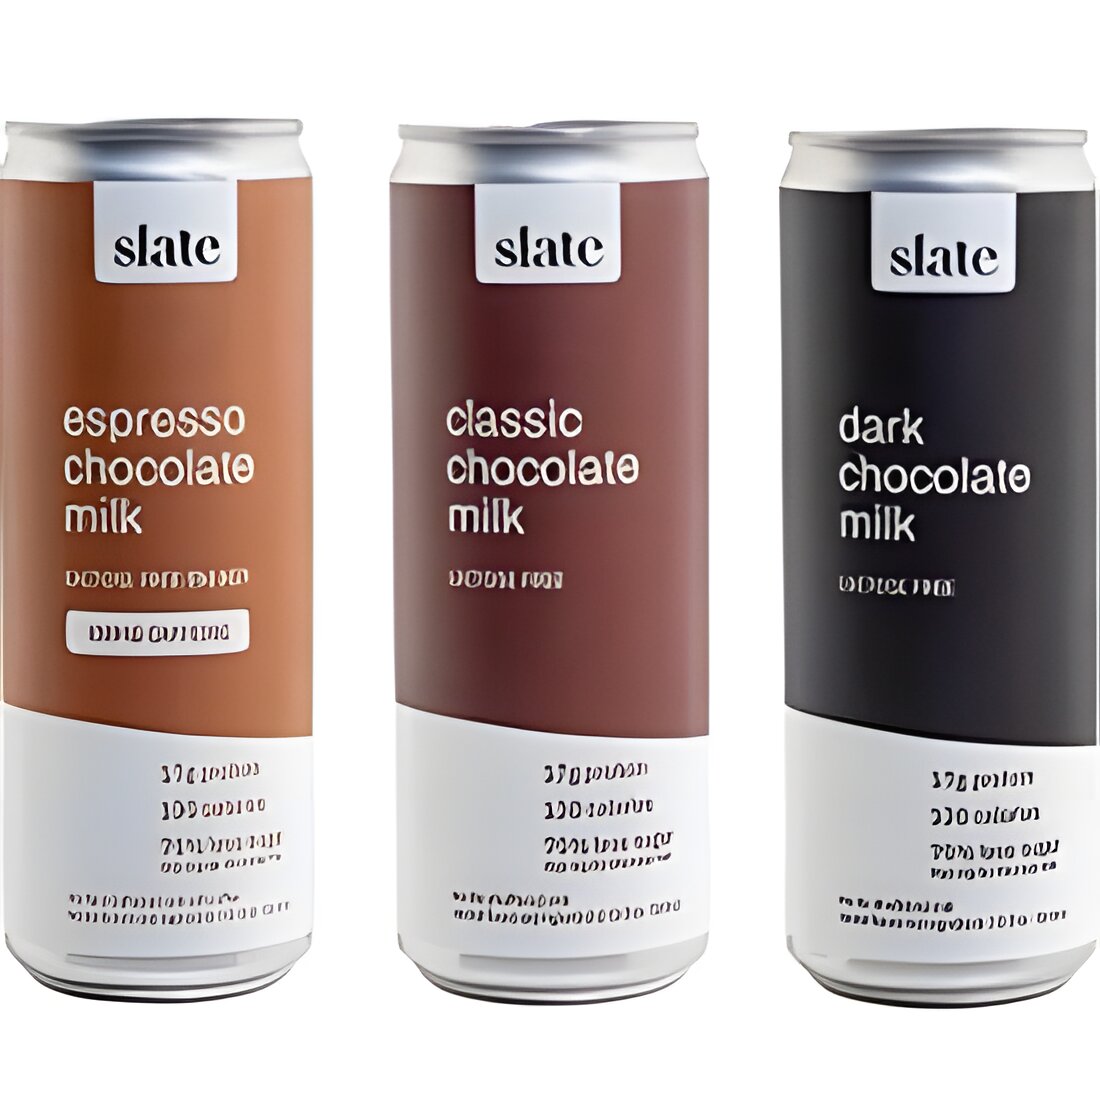 Free Slate Classic Chocolate Milk